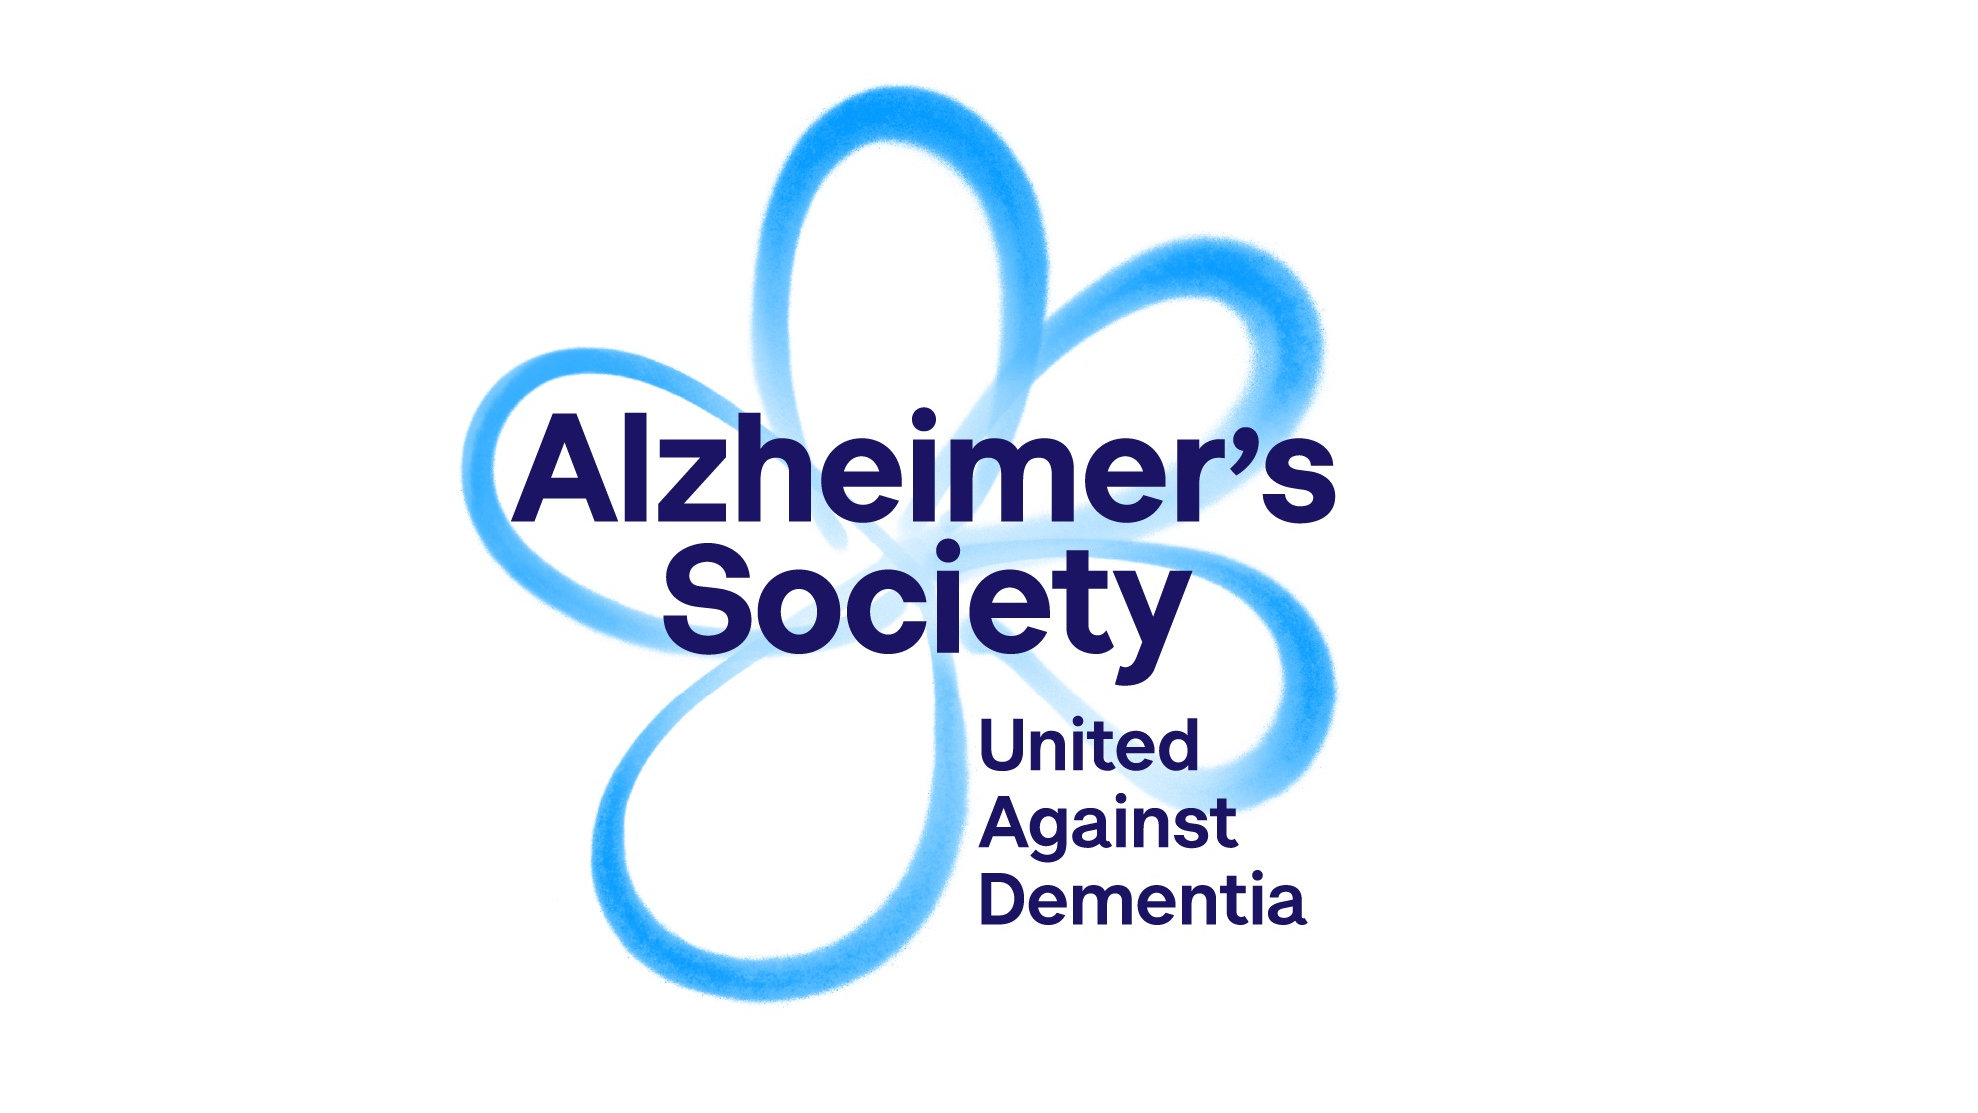 Alzheimer's Society - United Against Dementia